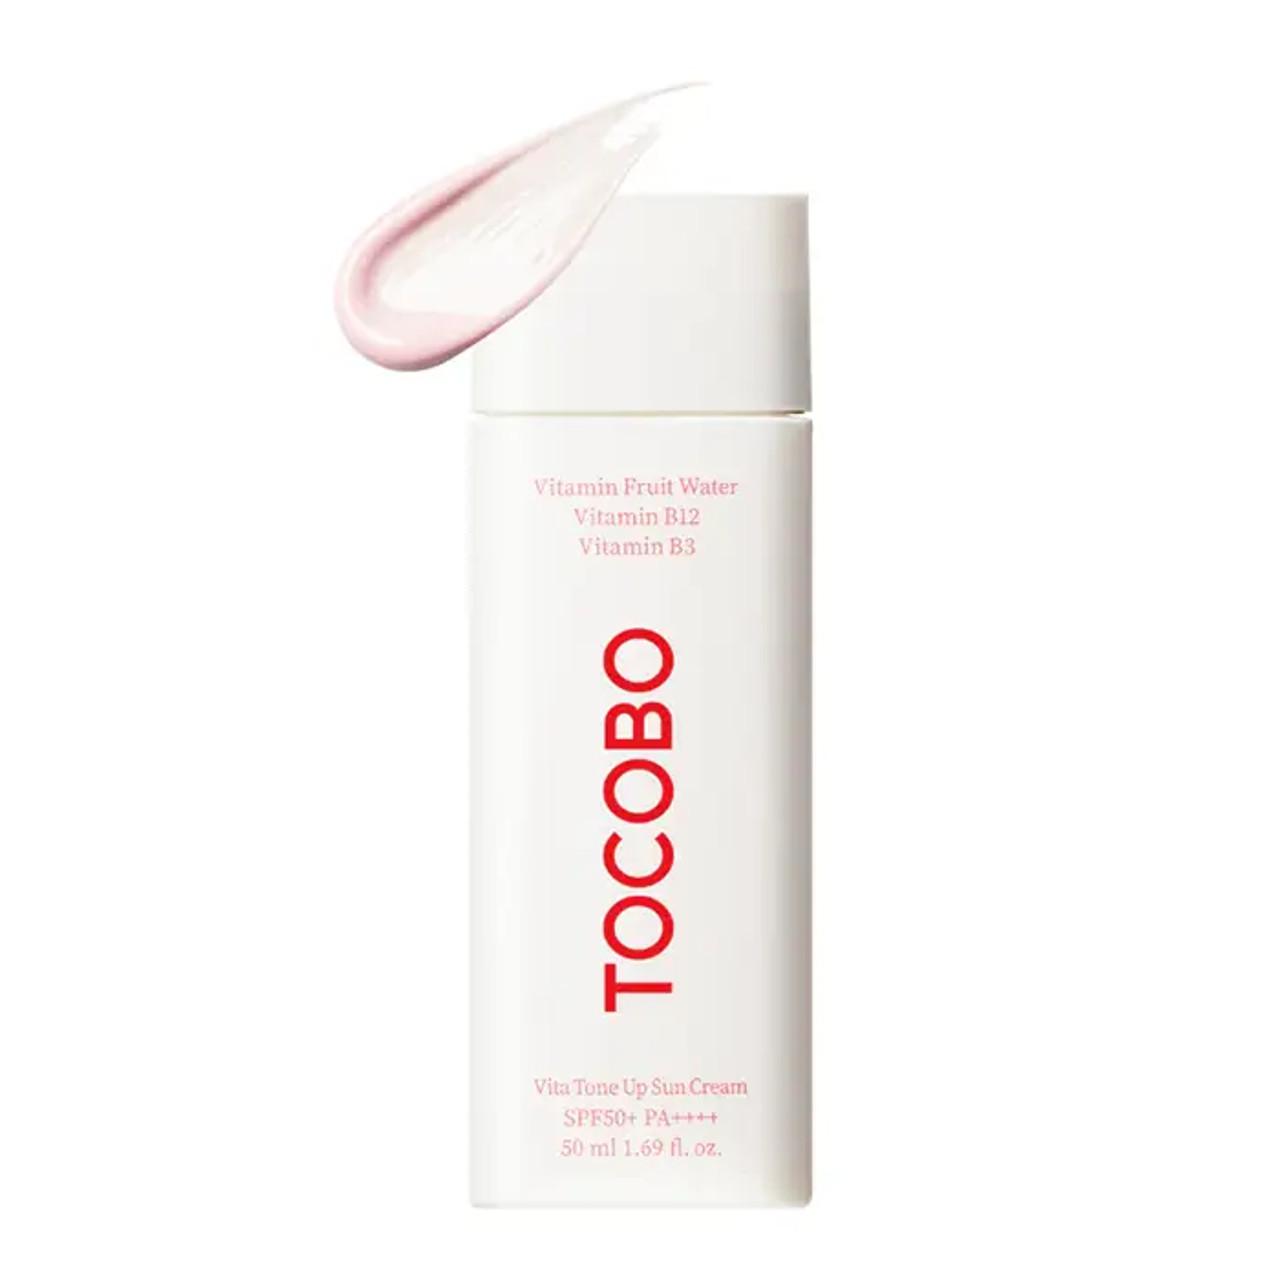 Tocobo Vita Tone-Up Sun Cream SPF 50 ++++ 50ML